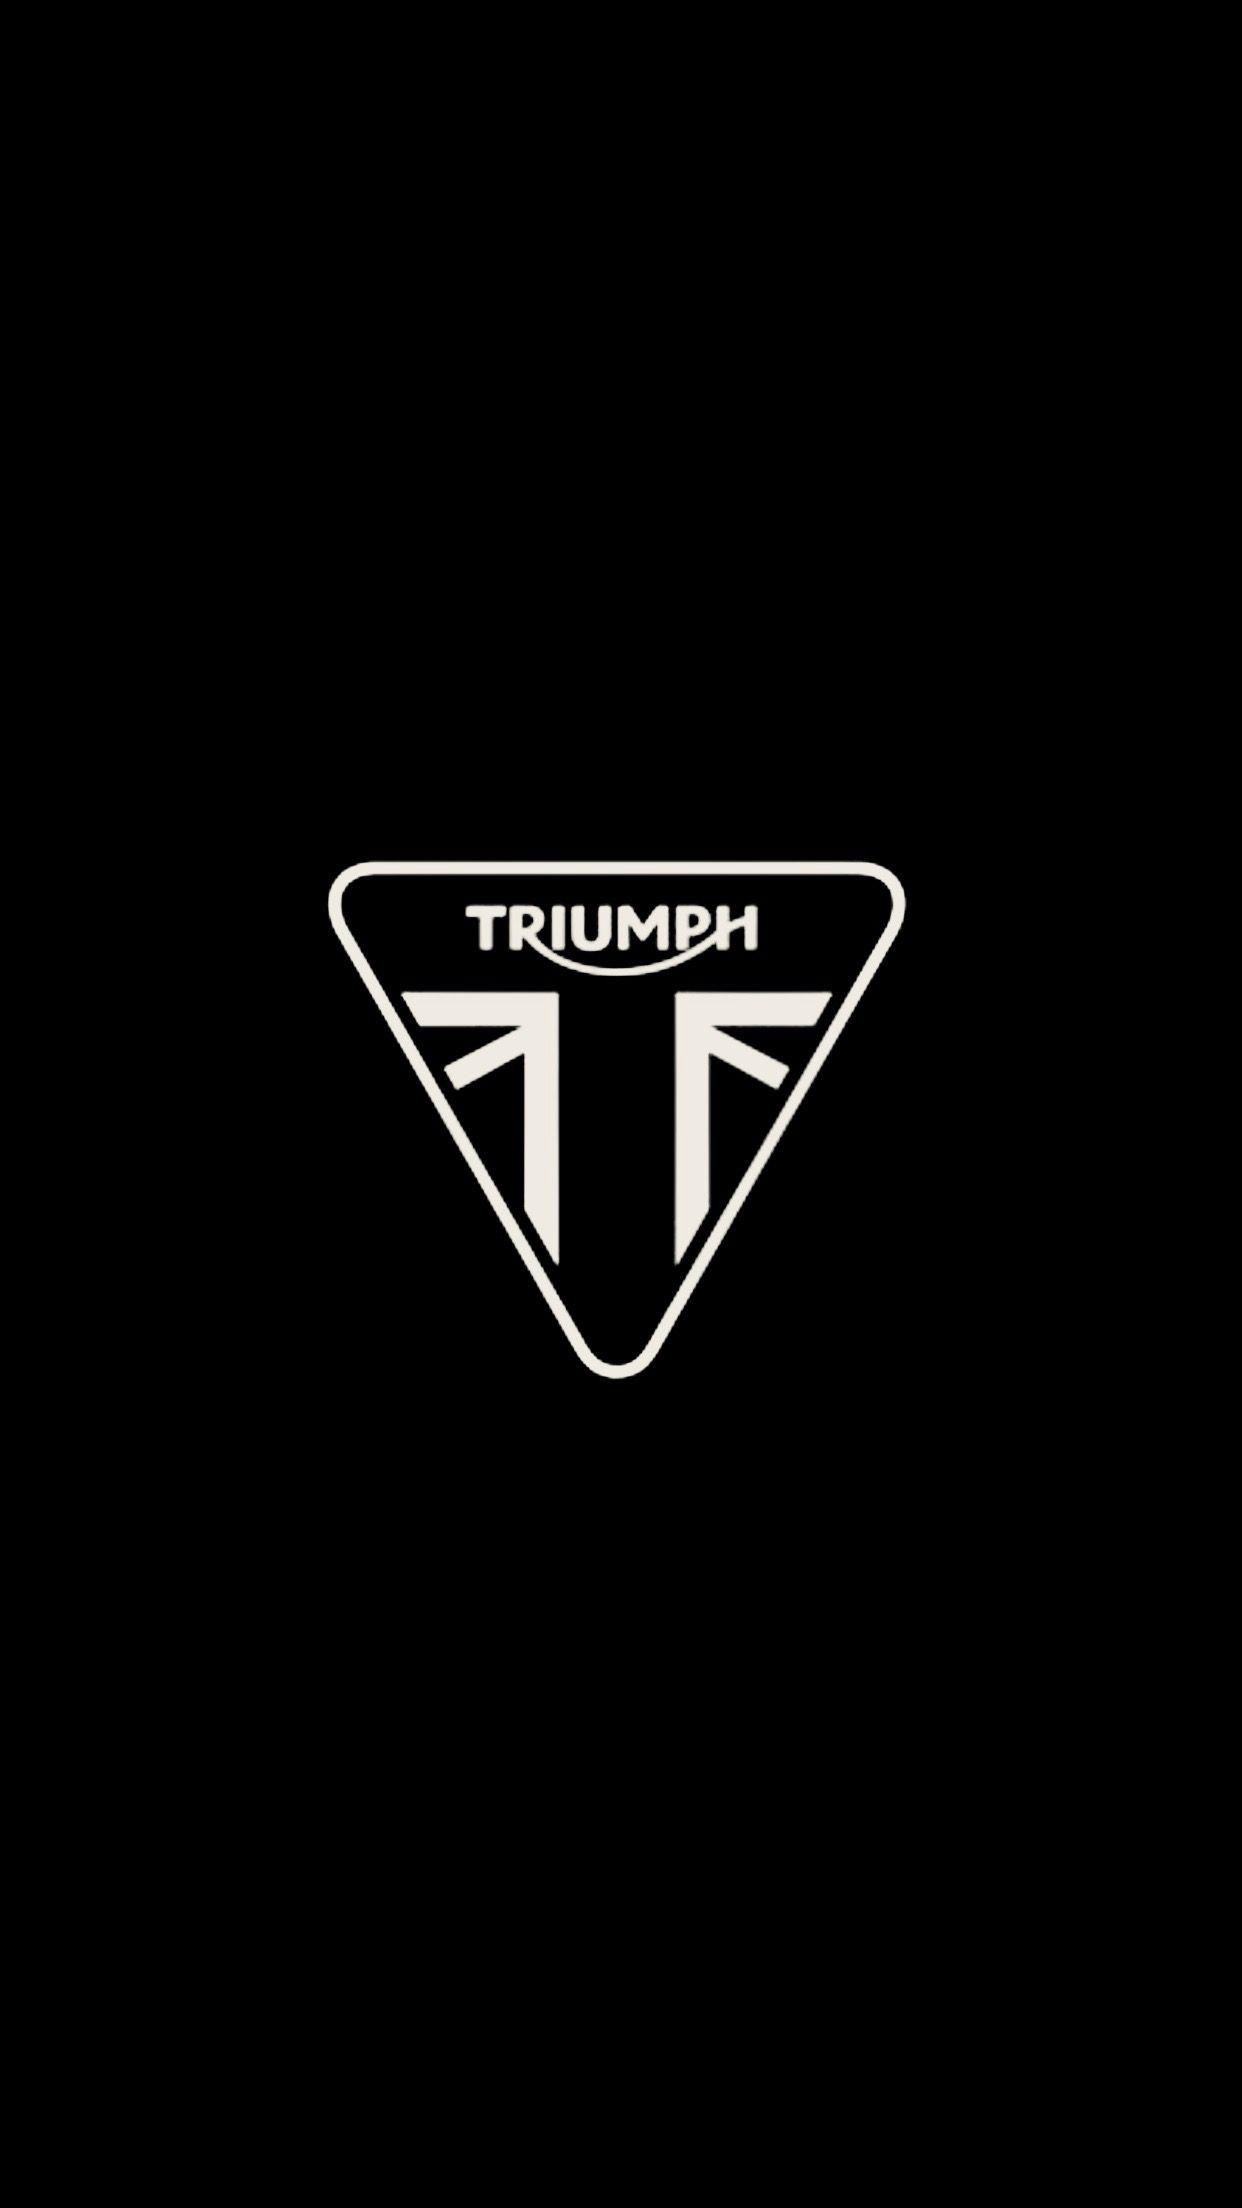 Triumph LOGO # Wallpaper. Triumph motorcycles, Motorcycle logo, Triumph logo